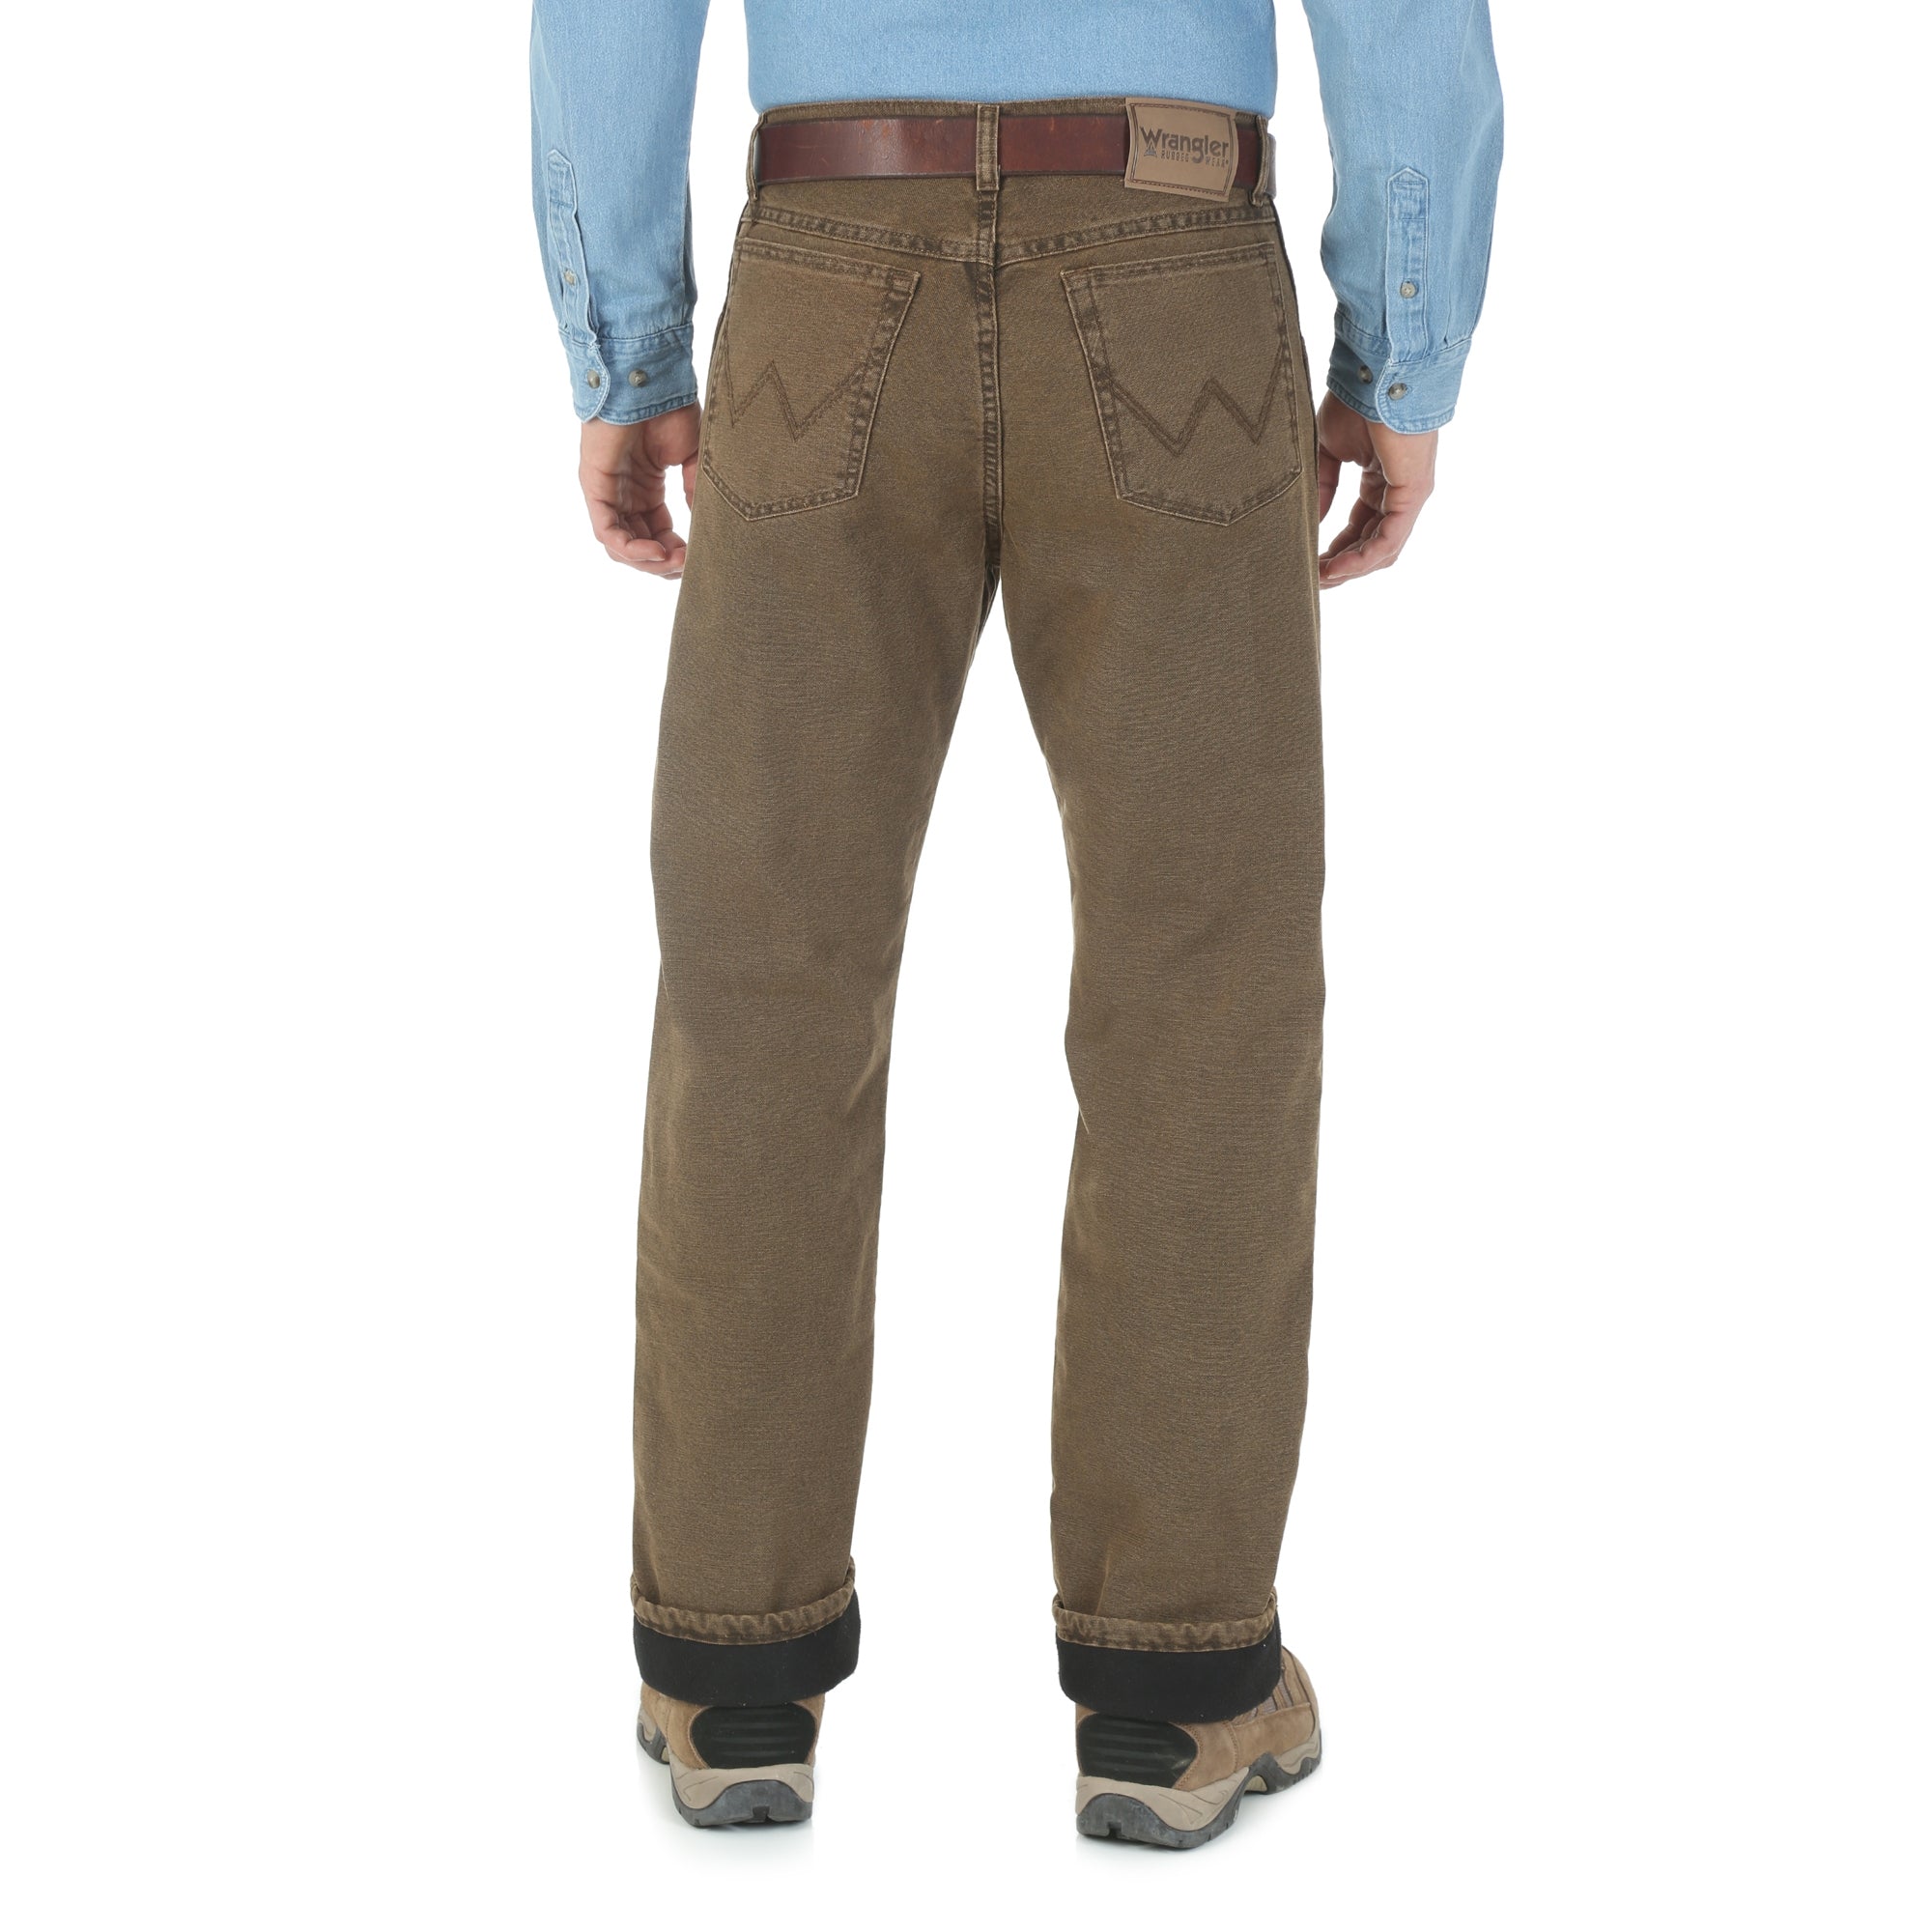 Wrangler Men's Rugged Wear Thermal Jeans – Good's Store Online